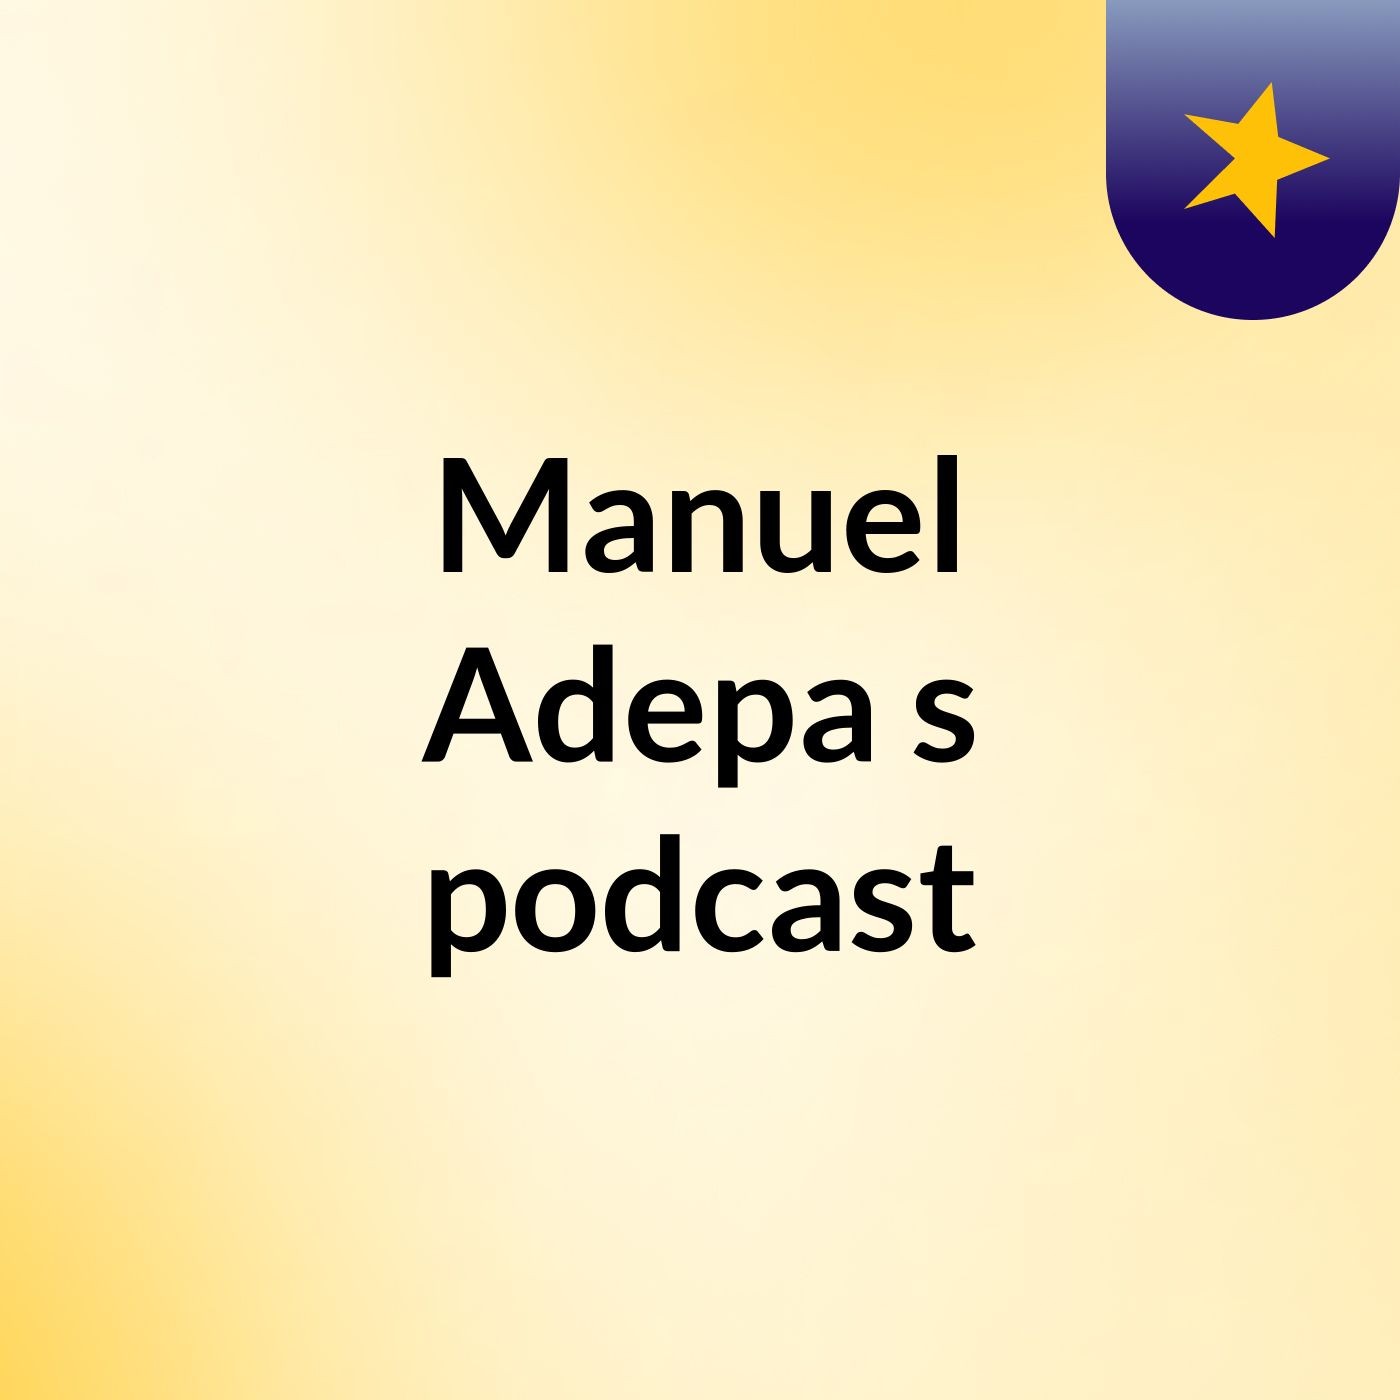 Manuel Adepa's podcast